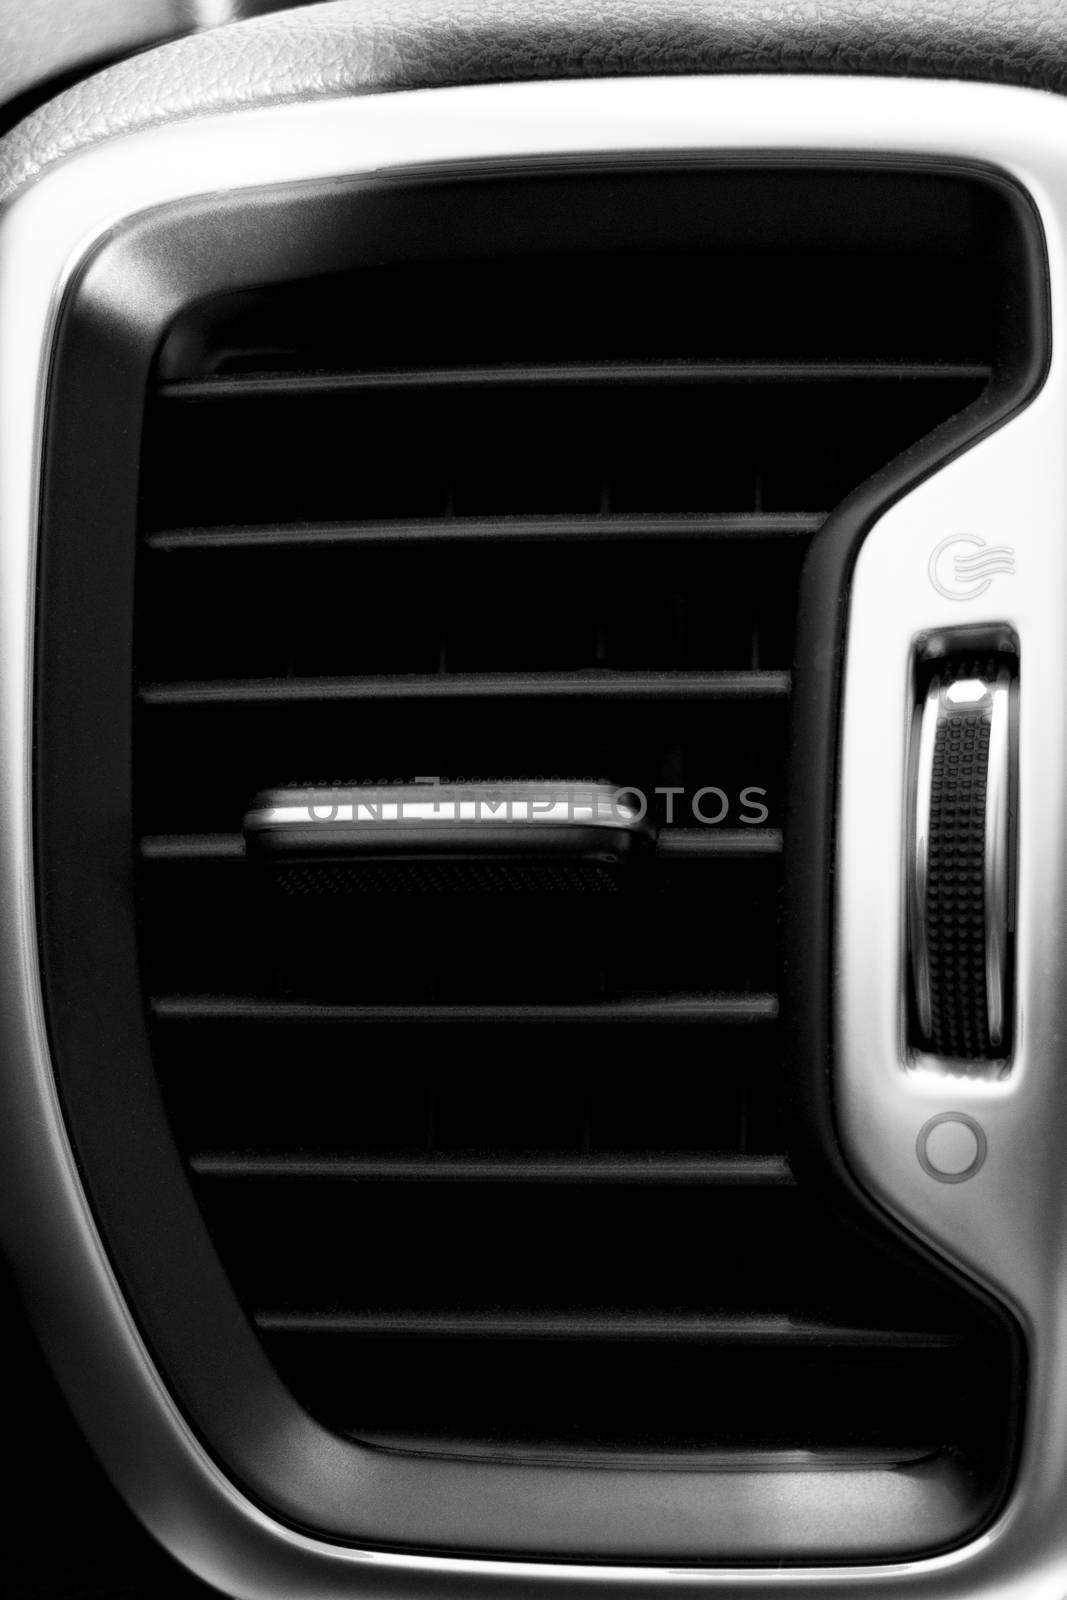 Air conditioning car ventilation system in modern car. by kip02kas